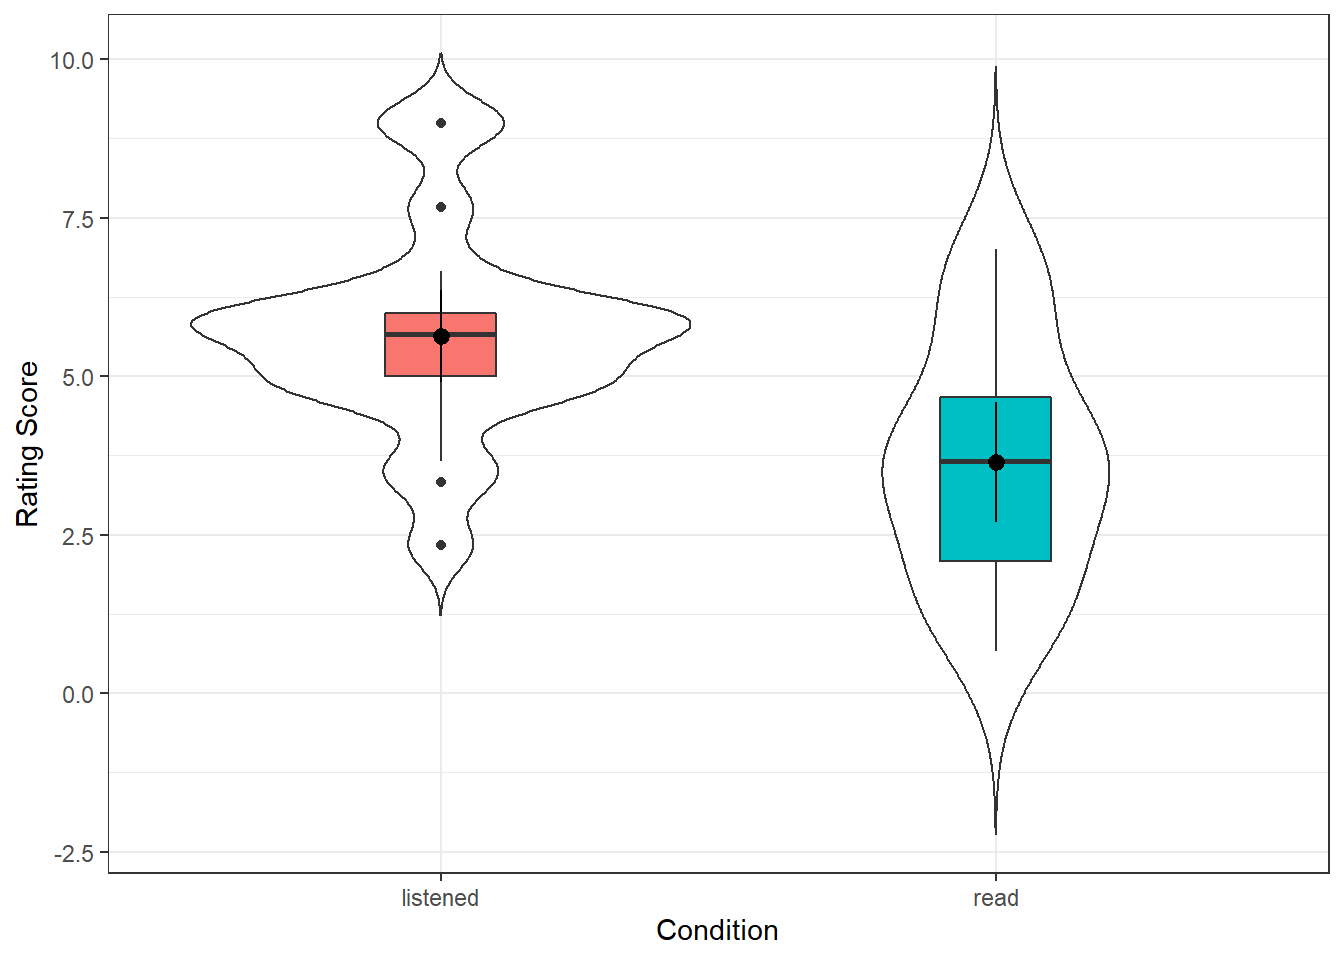 Violin-boxplot of the evaluator data